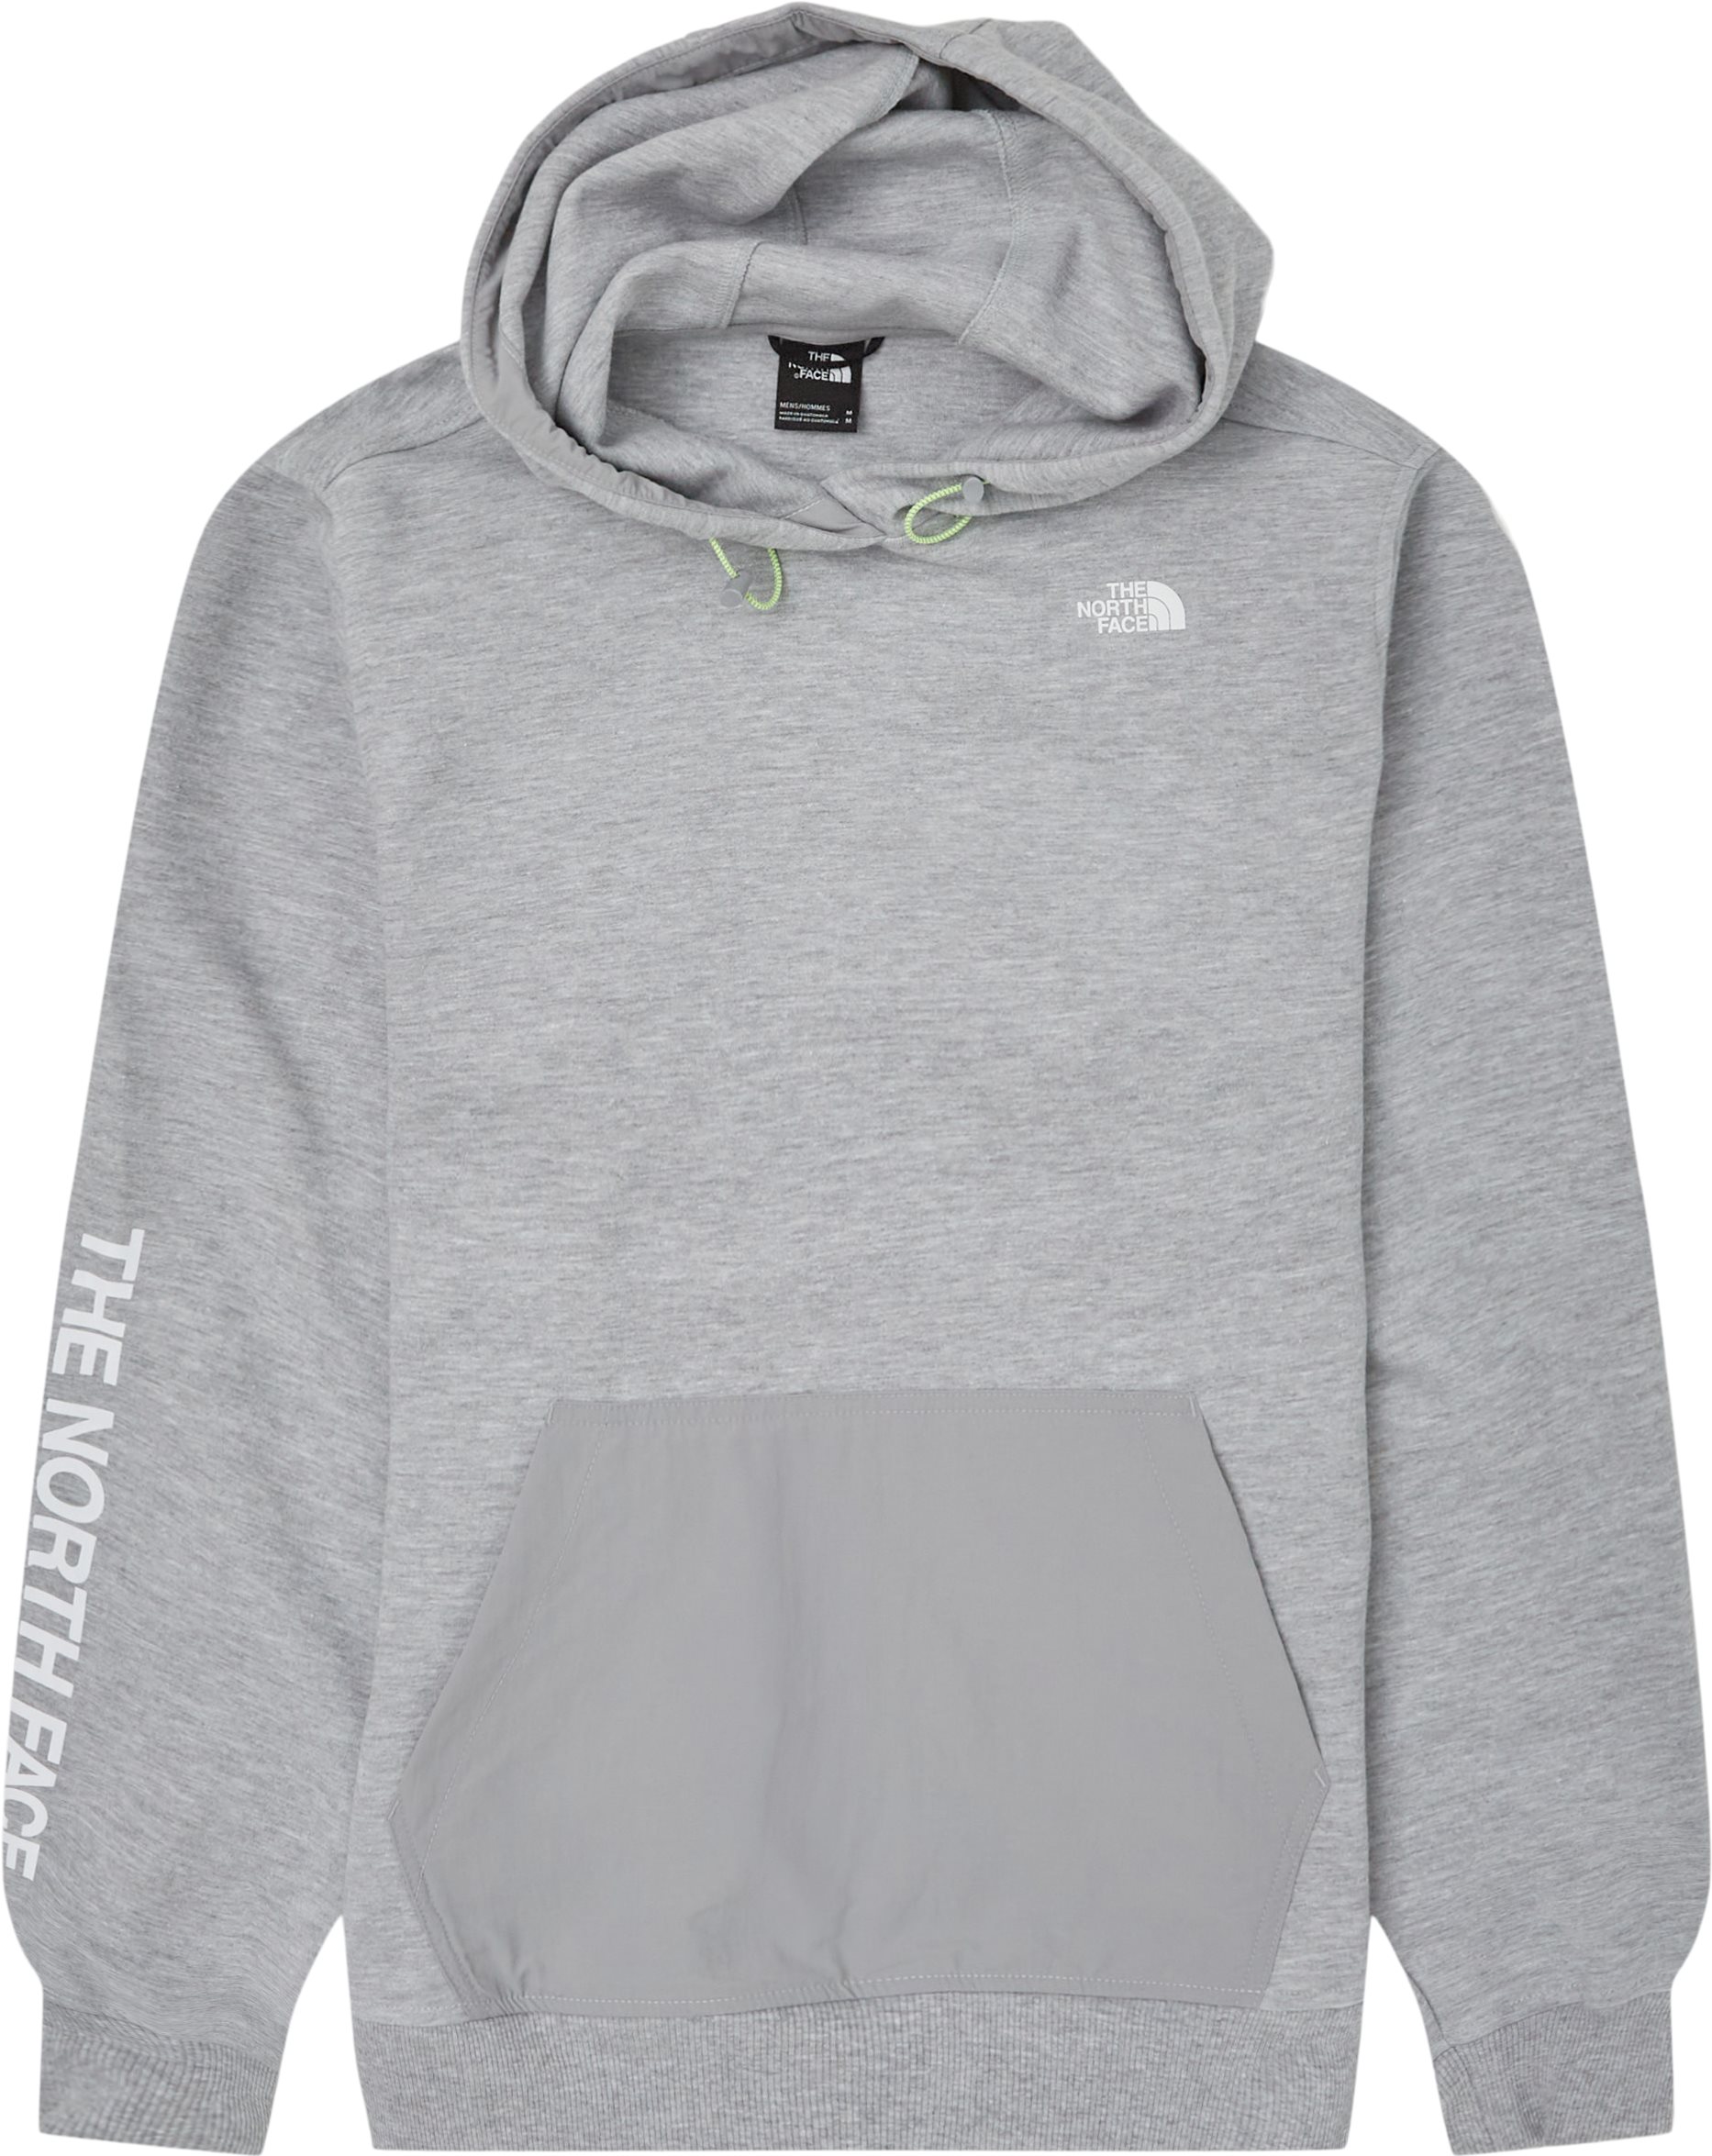 Tech Hoodie - Sweatshirts - Regular fit - Grey